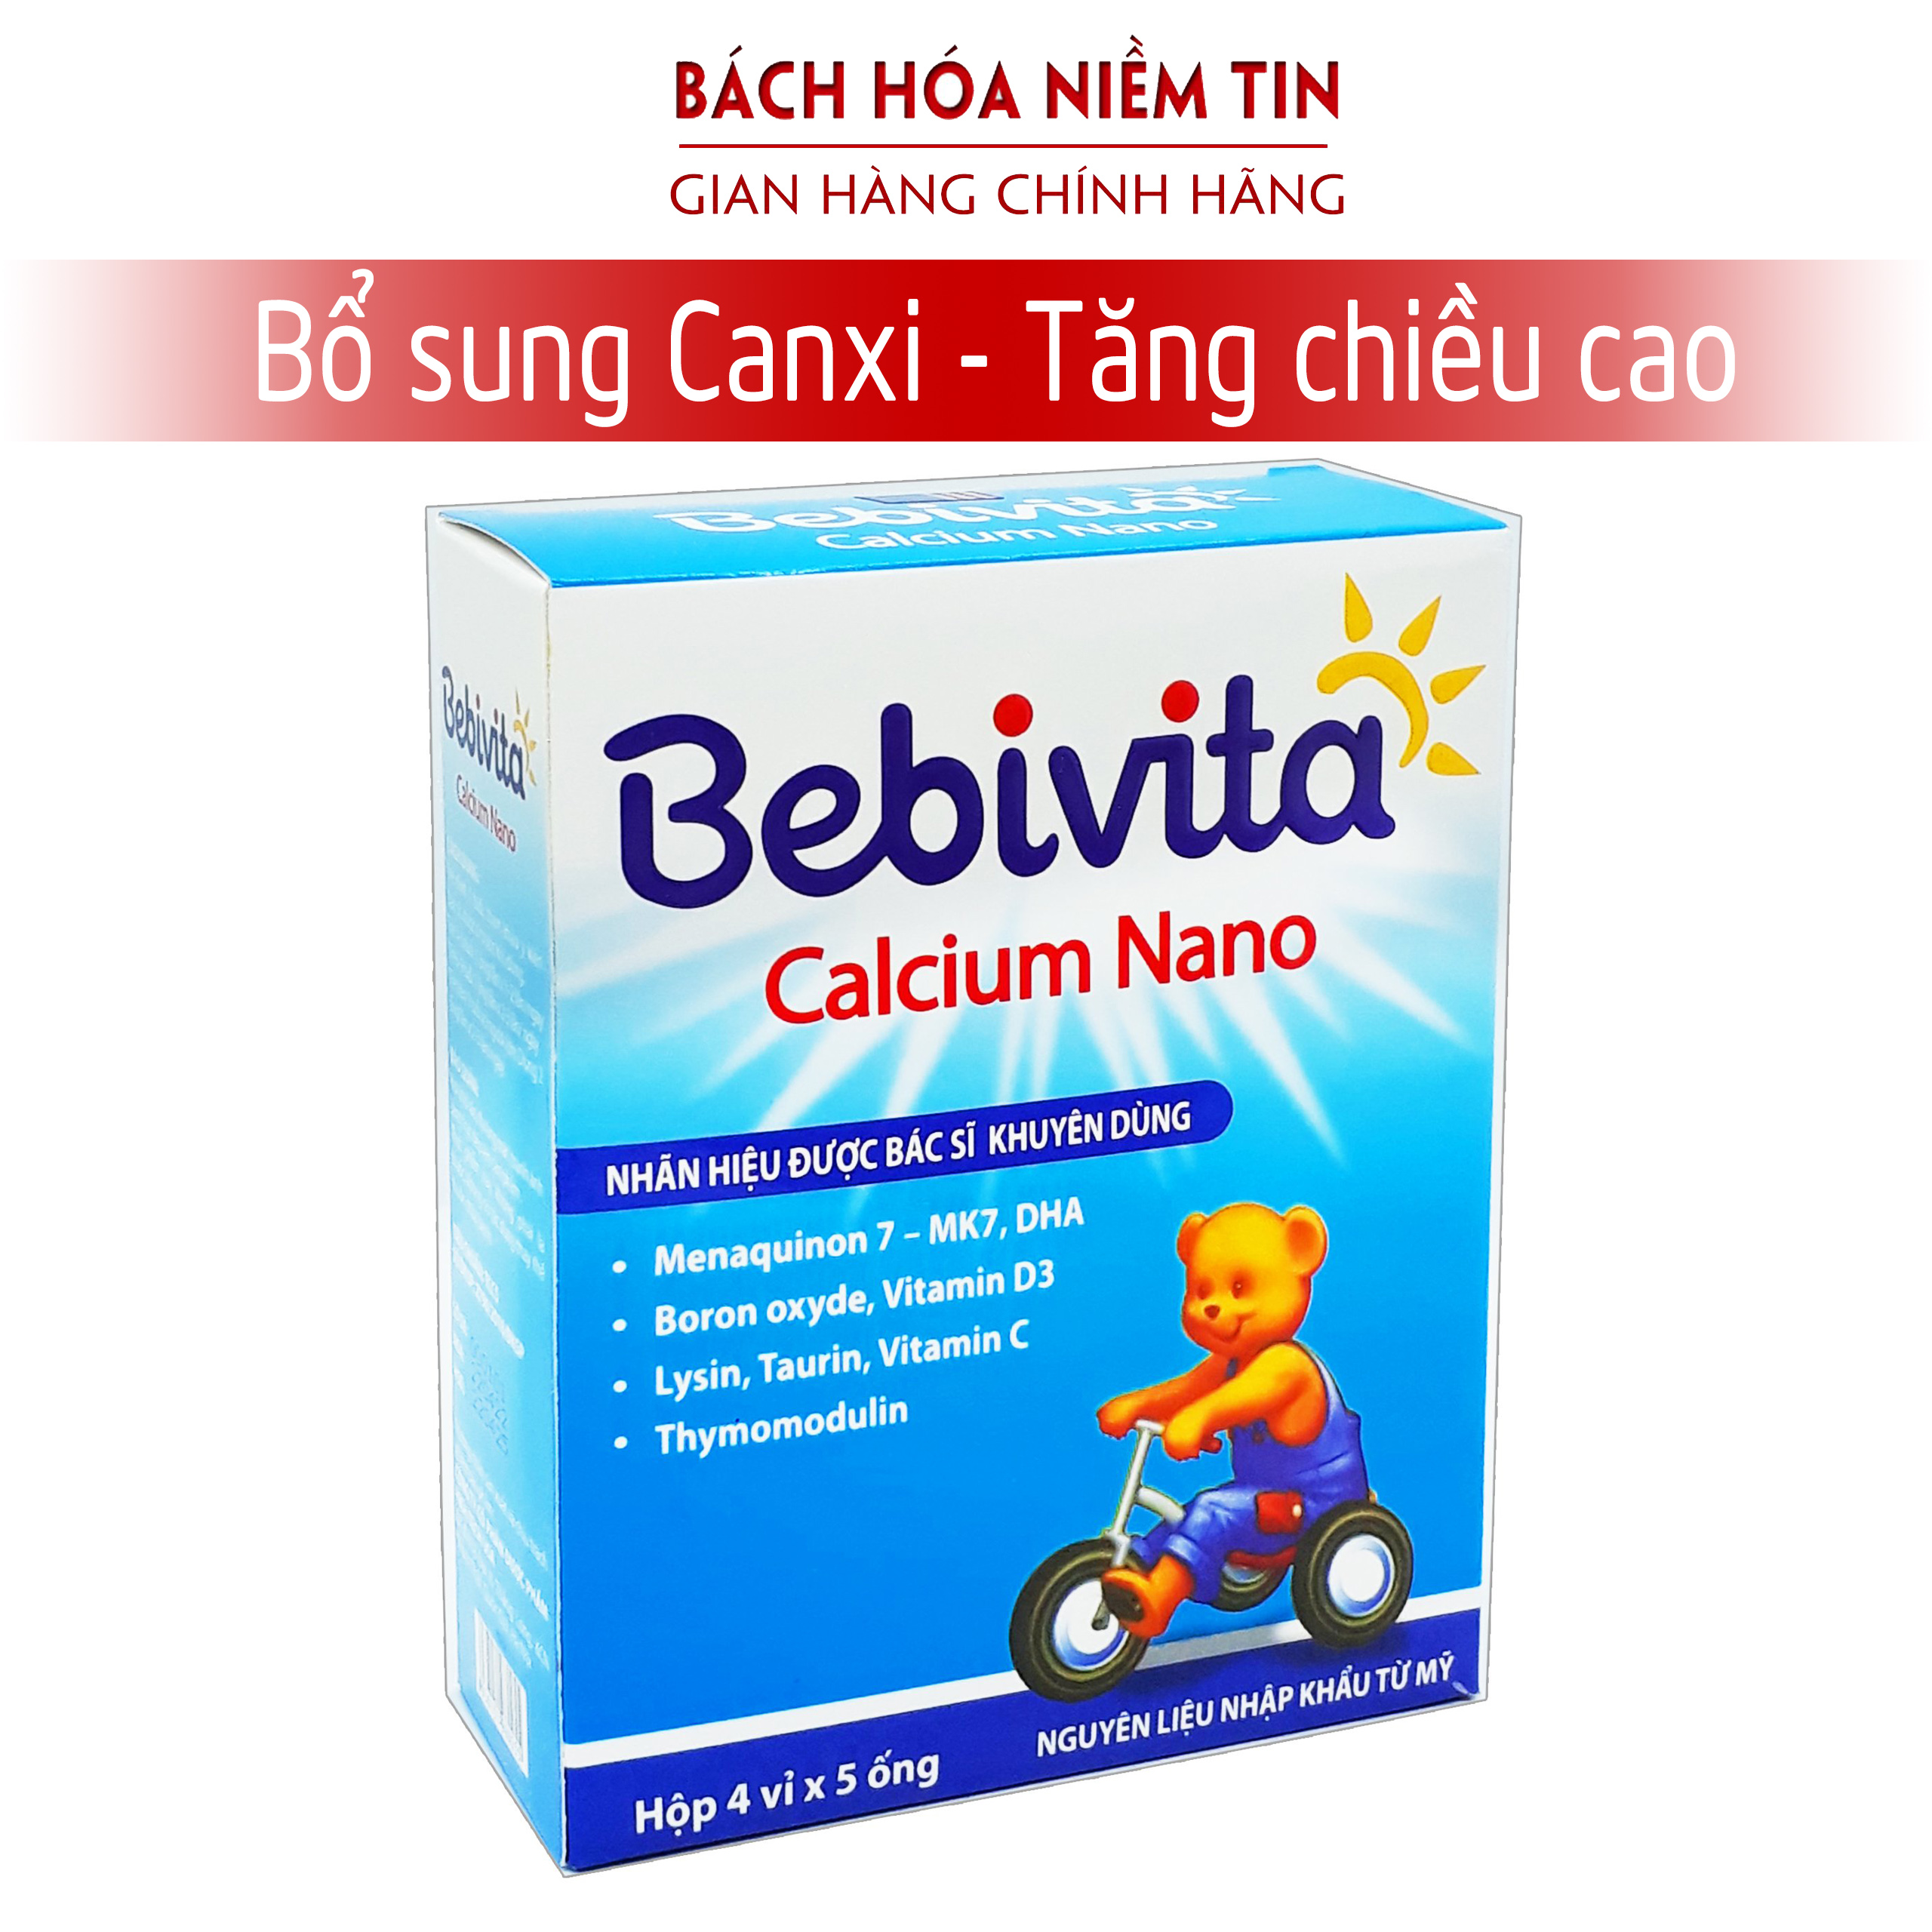 Siro bổ sung canxi cho bé Bebivita Calcium Nano - bổ sung canxi, vitamin D3